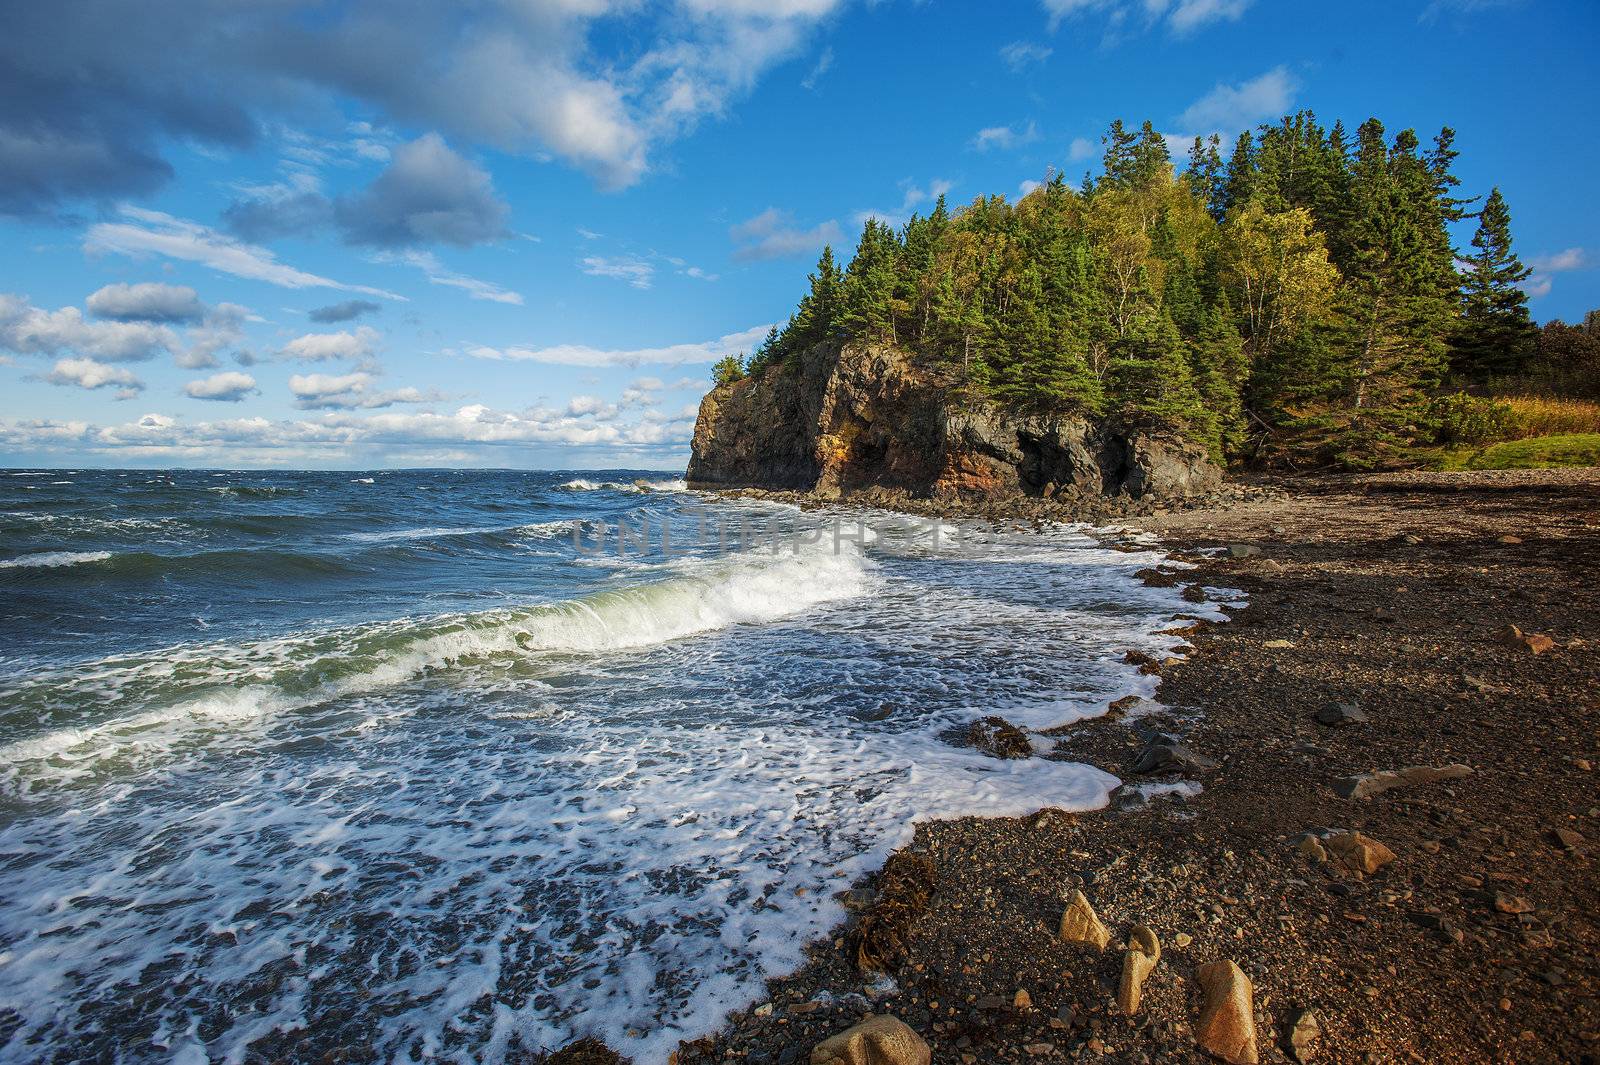 Rocky beach off the coast of Maine, USA